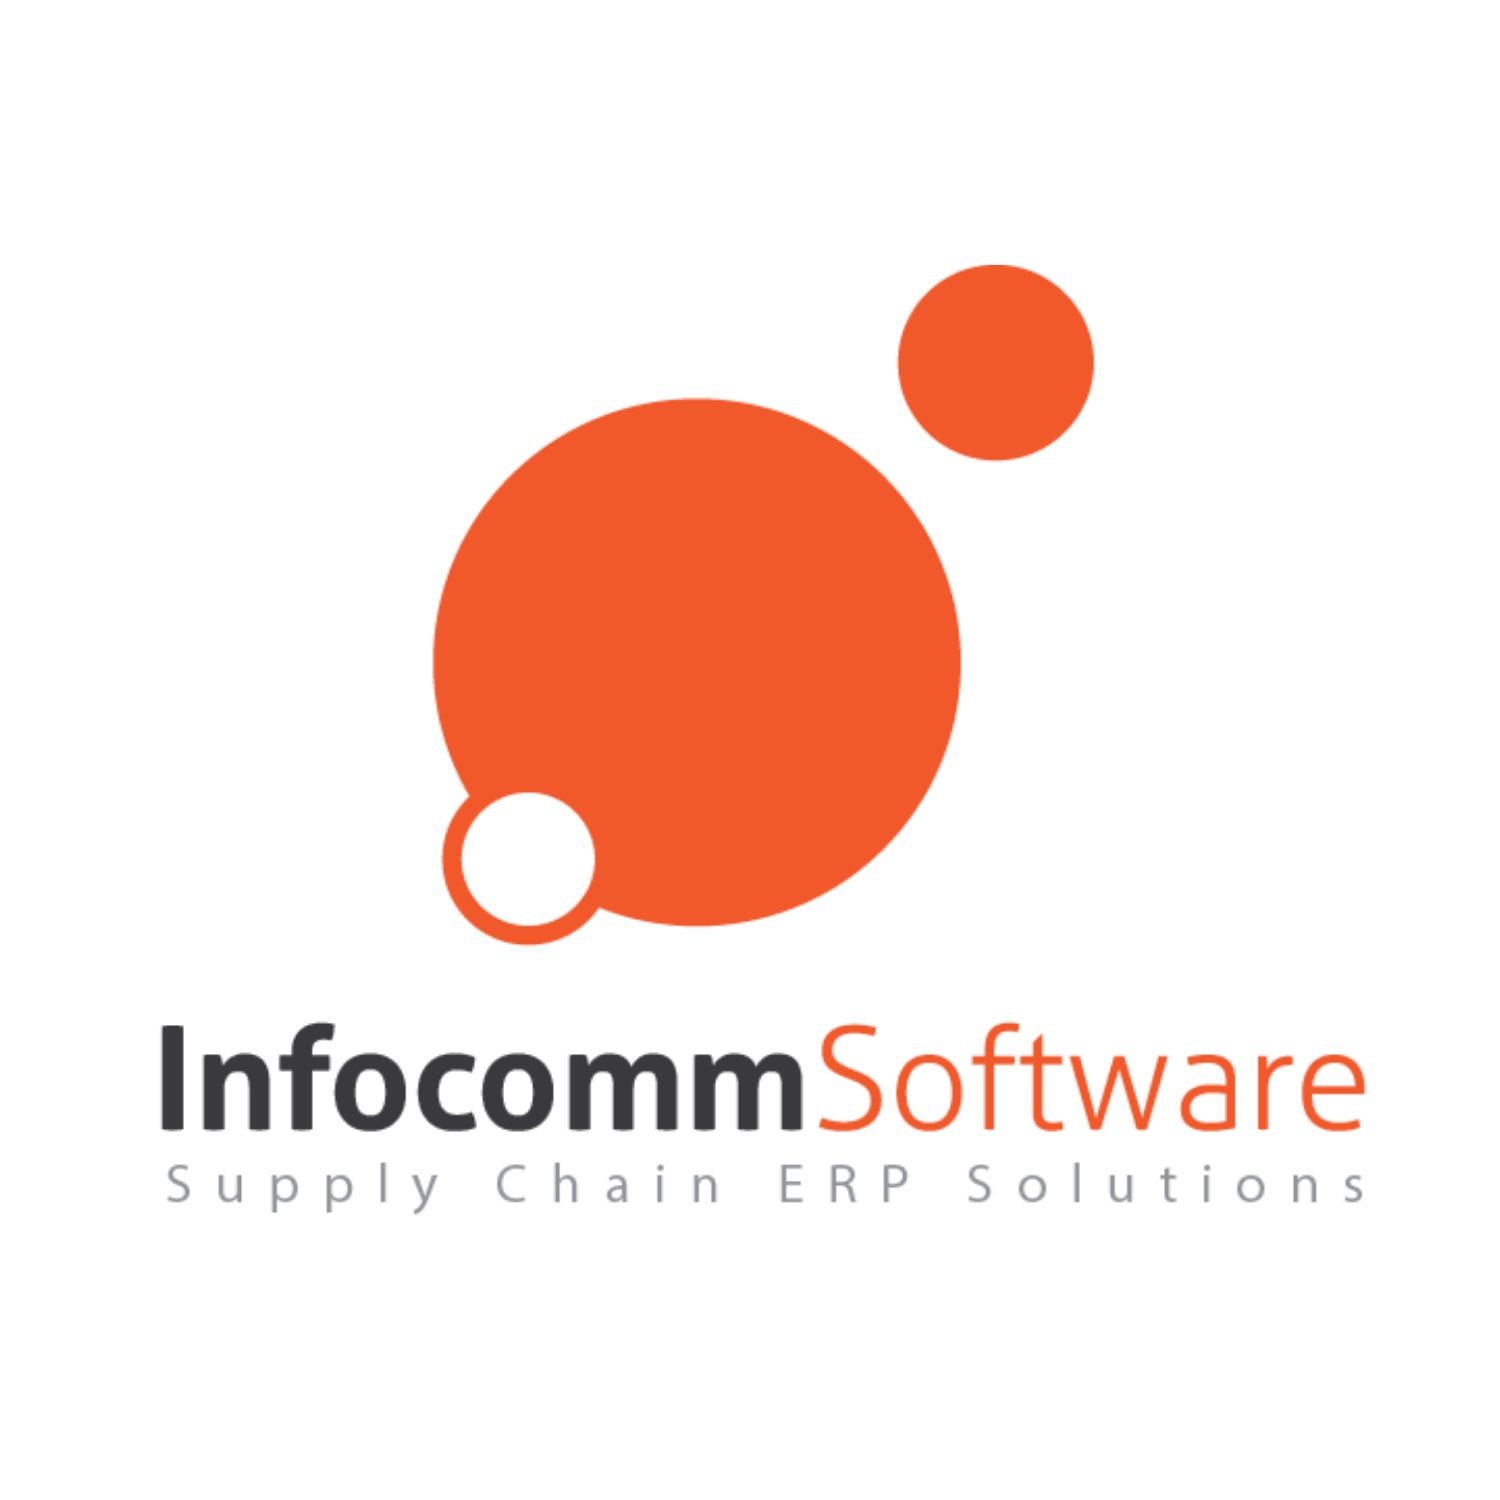 Infocomm Software logo